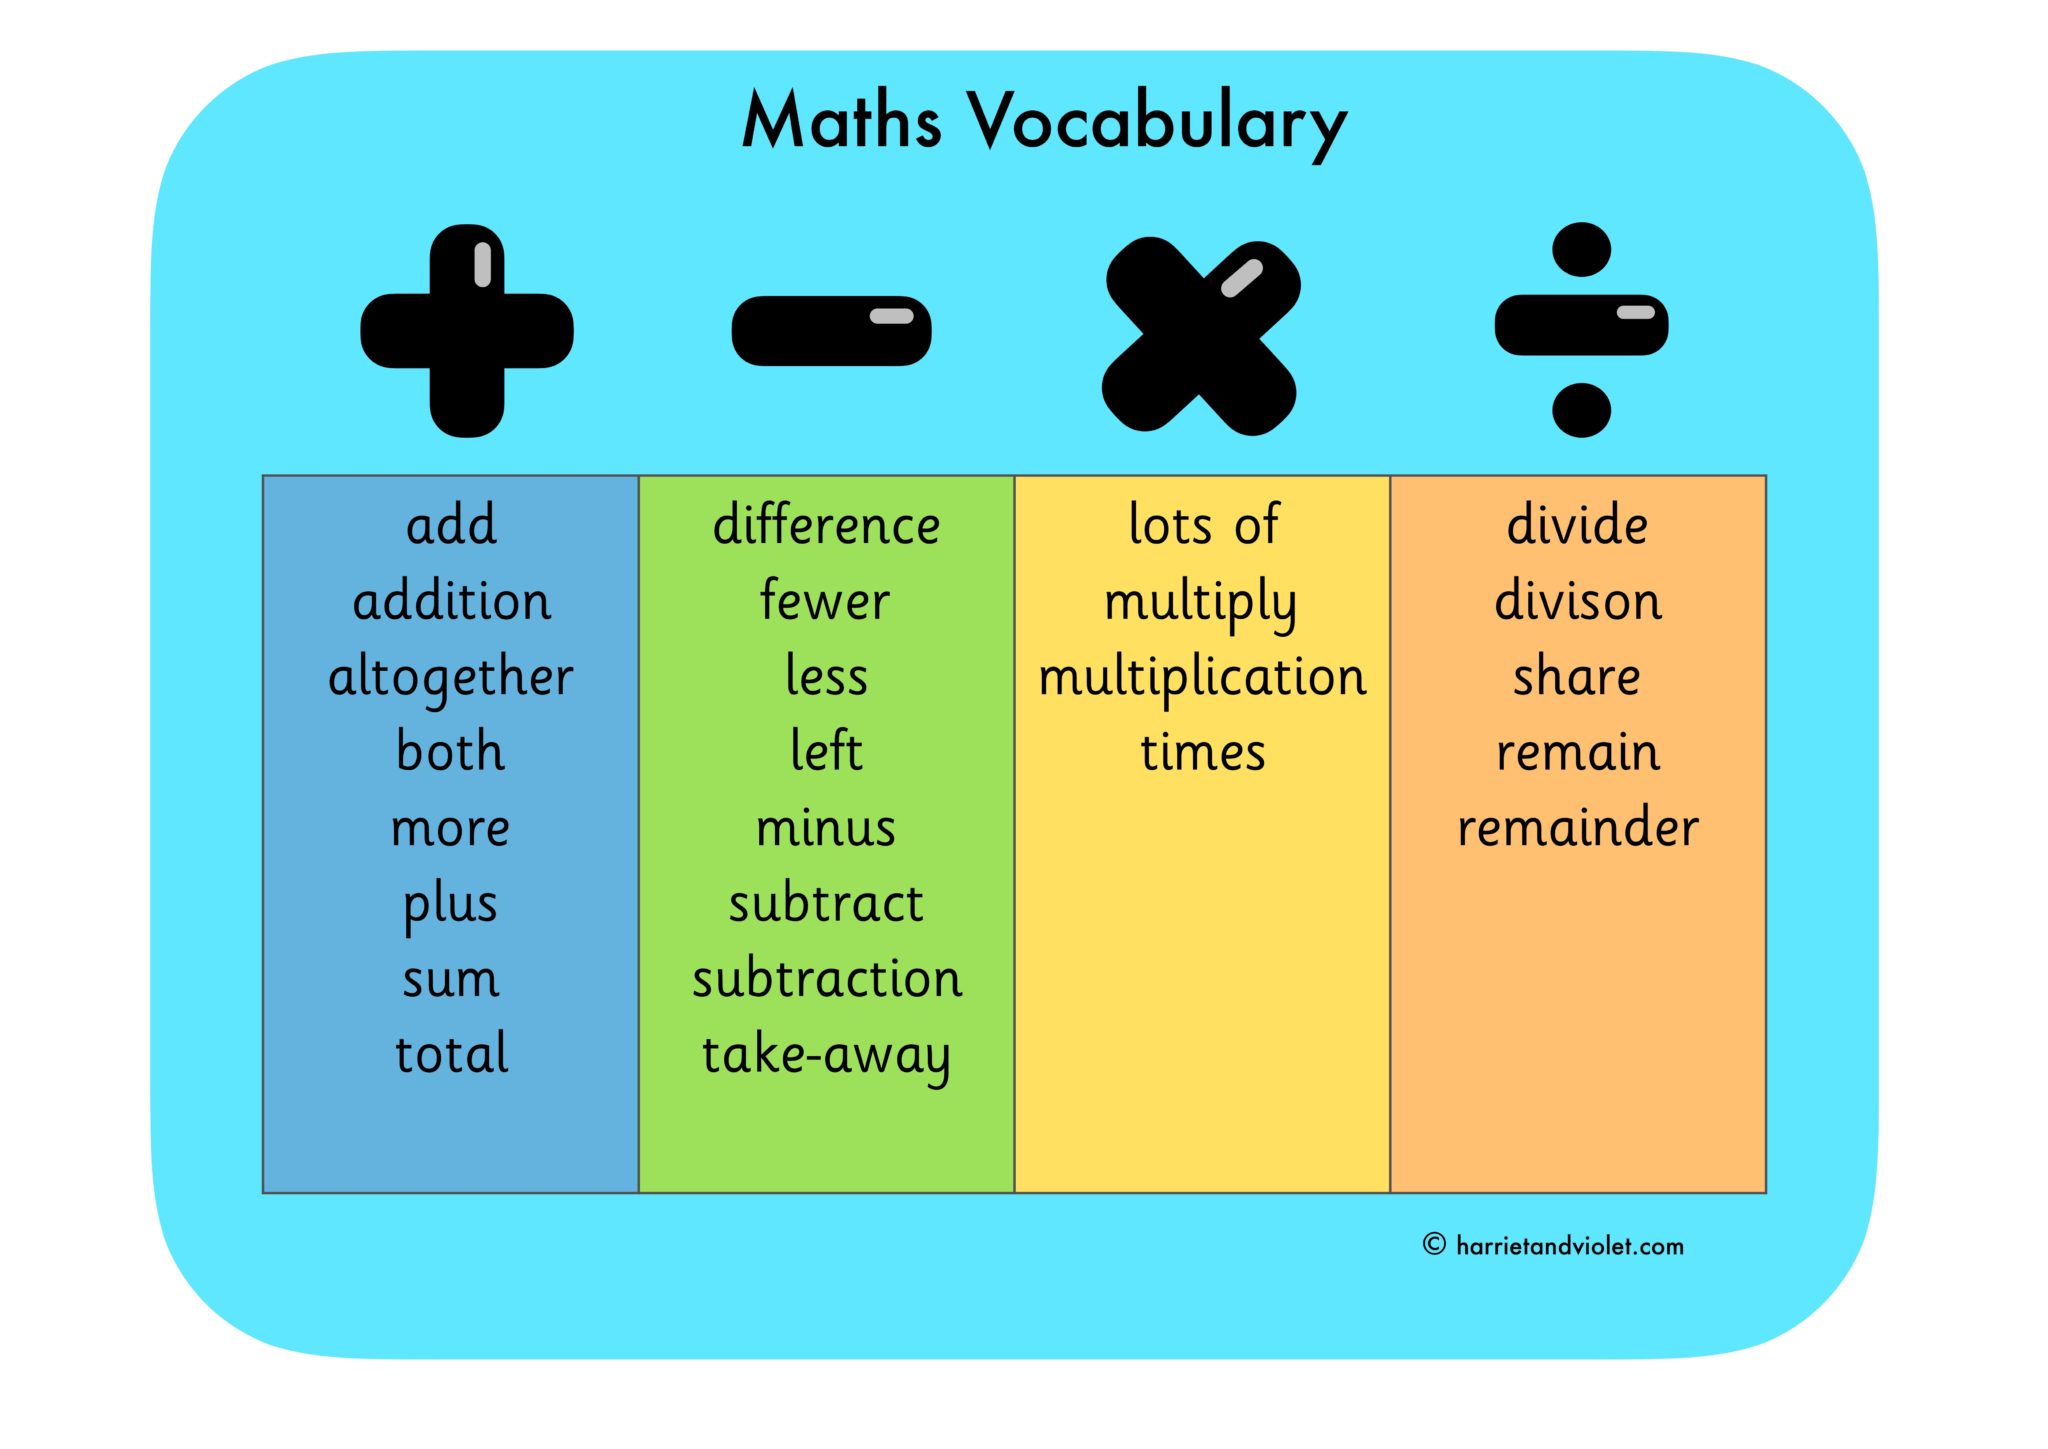 English mathematics. Математика Vocabulary. Mathematical terms in English. Maths in English. Math English Vocabulary.